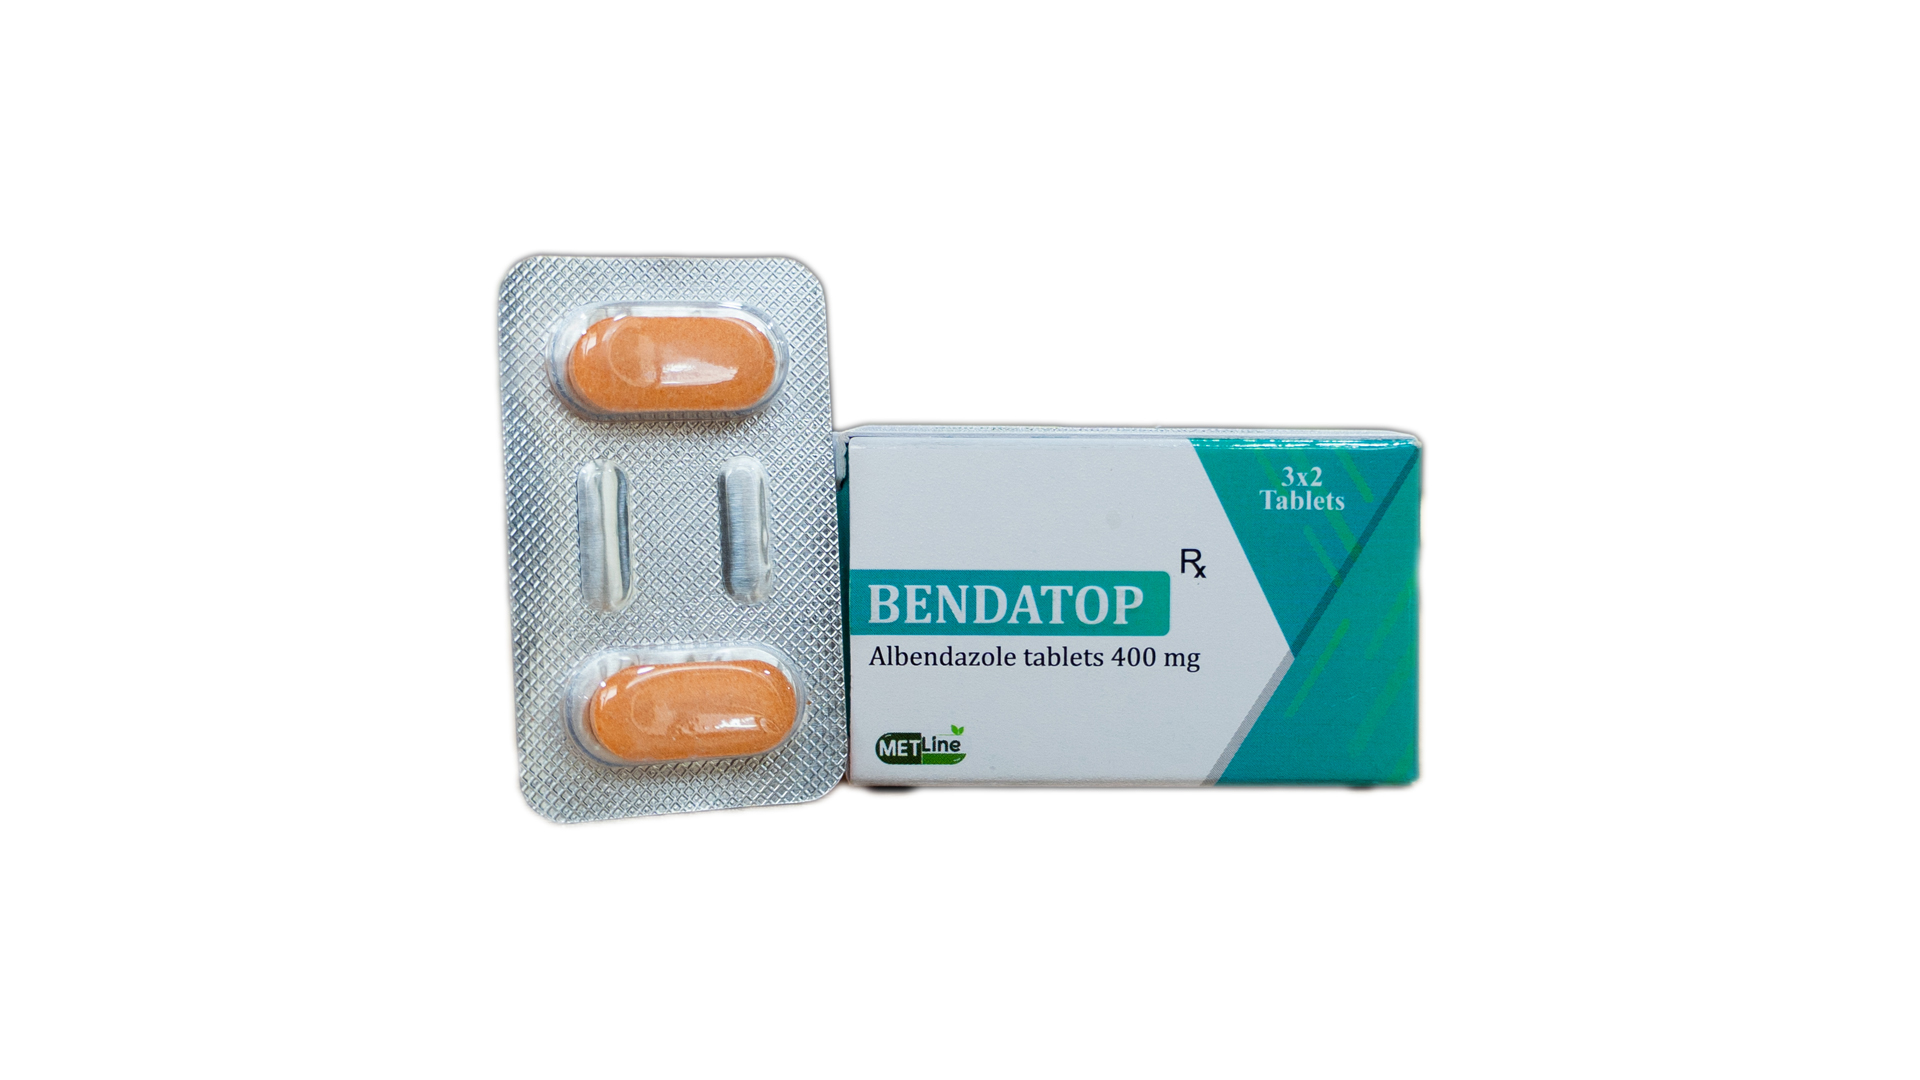 Bendatop No6 tablet